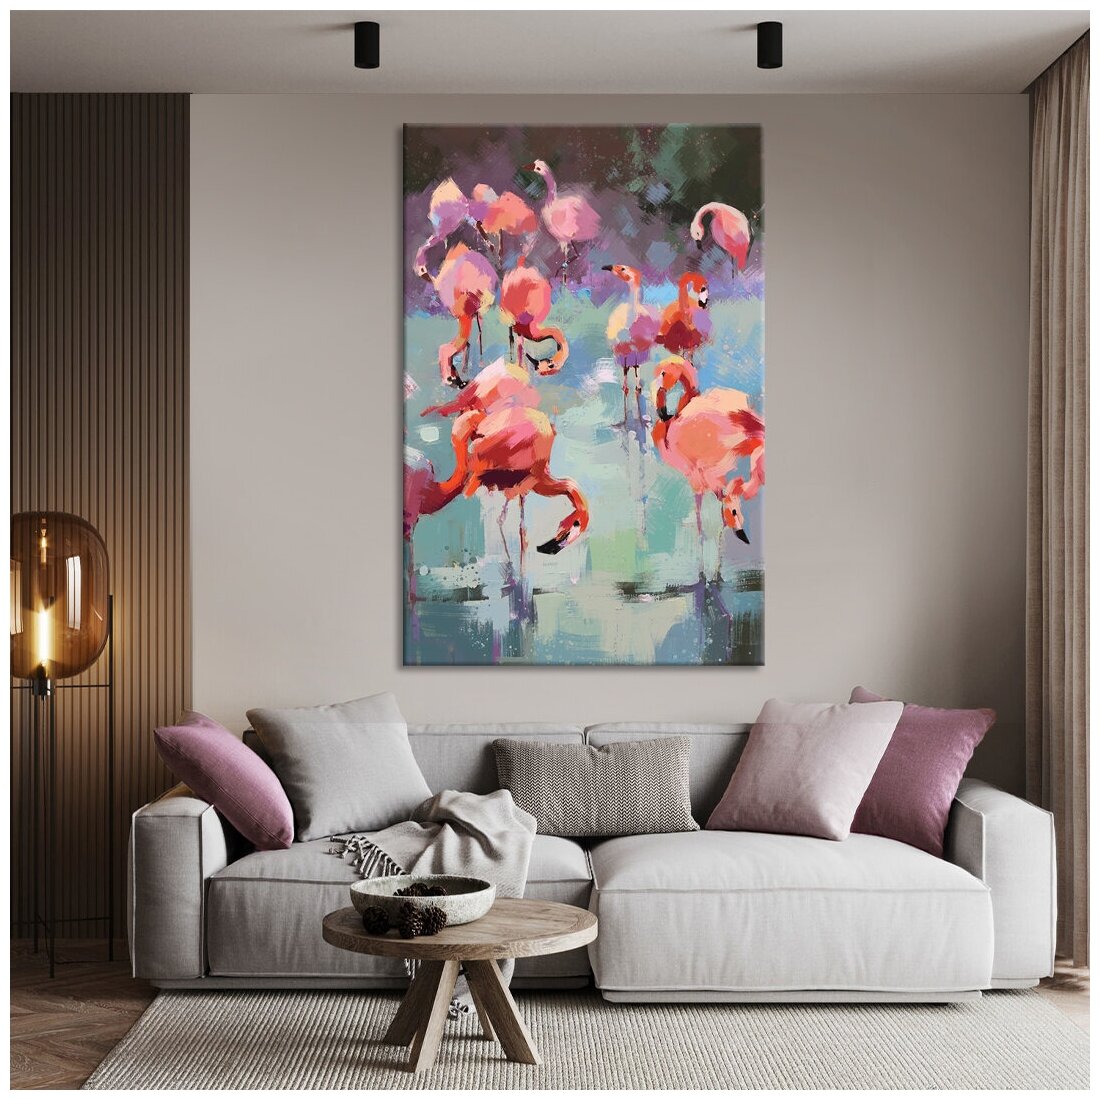 Картина интерьерная на холсте Art. home24 Пейзаж с фламинго, 50 x 70